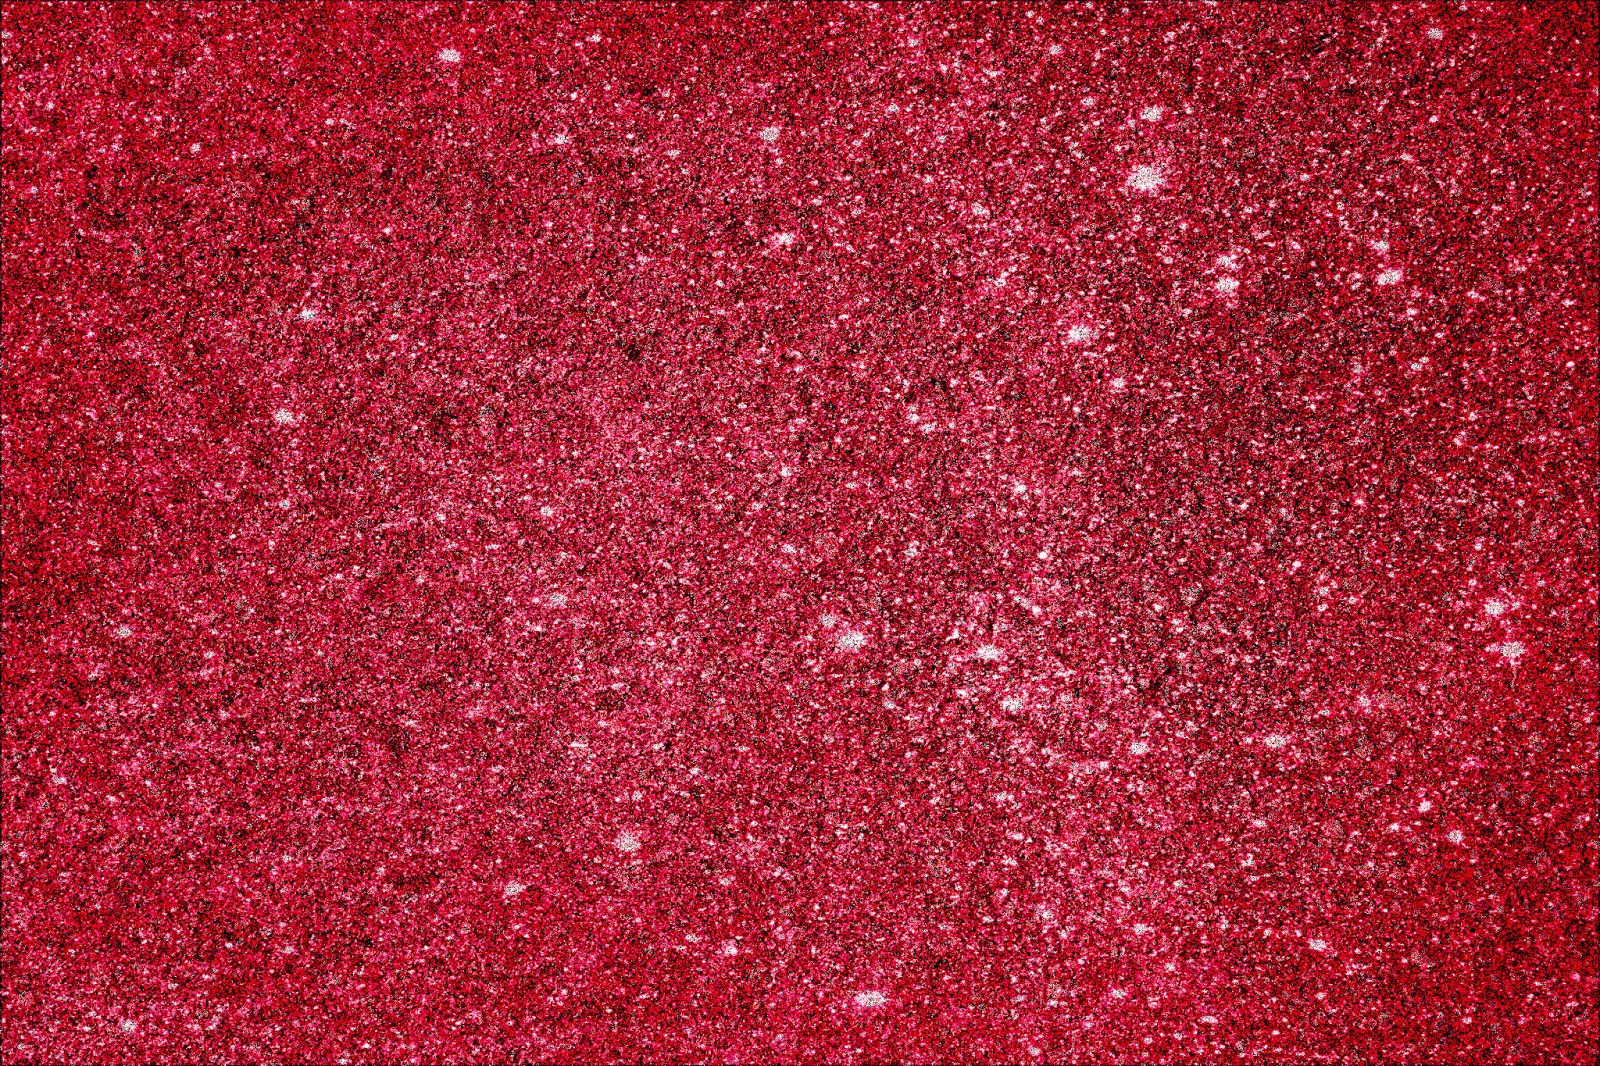 Aaaaaaaaiqk X5mfe S1600 Dark Glitter Red By Injennyjenny Jpg